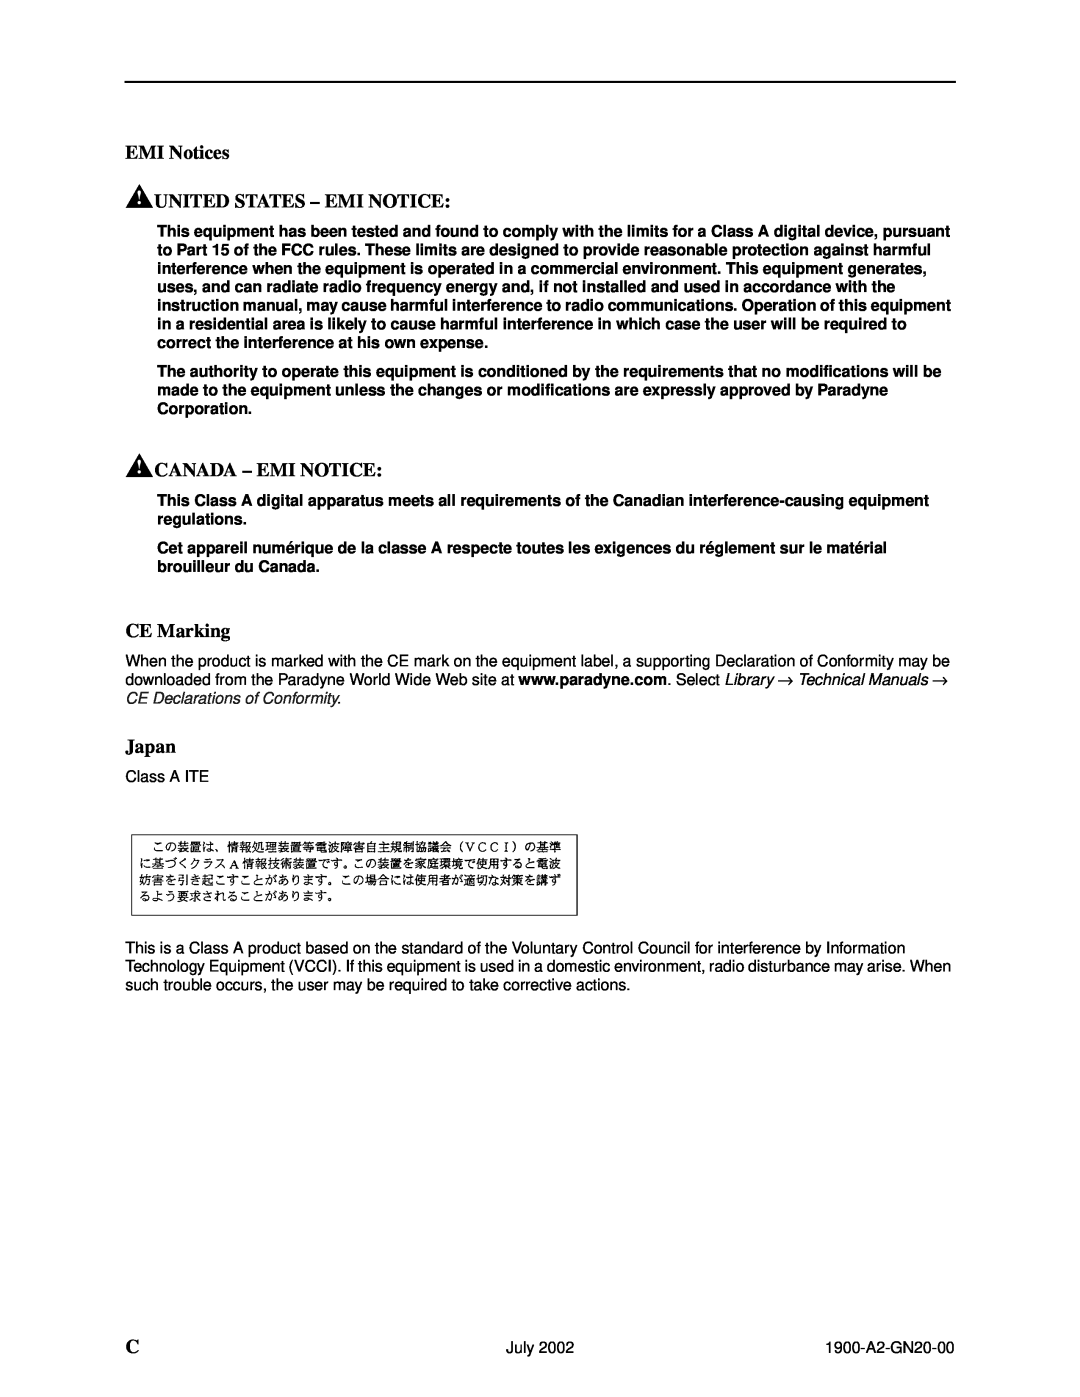 Paradyne 1900 manual EMI Notices UNITED STATES - EMI NOTICE, Canada - Emi Notice, CE Marking, Japan 